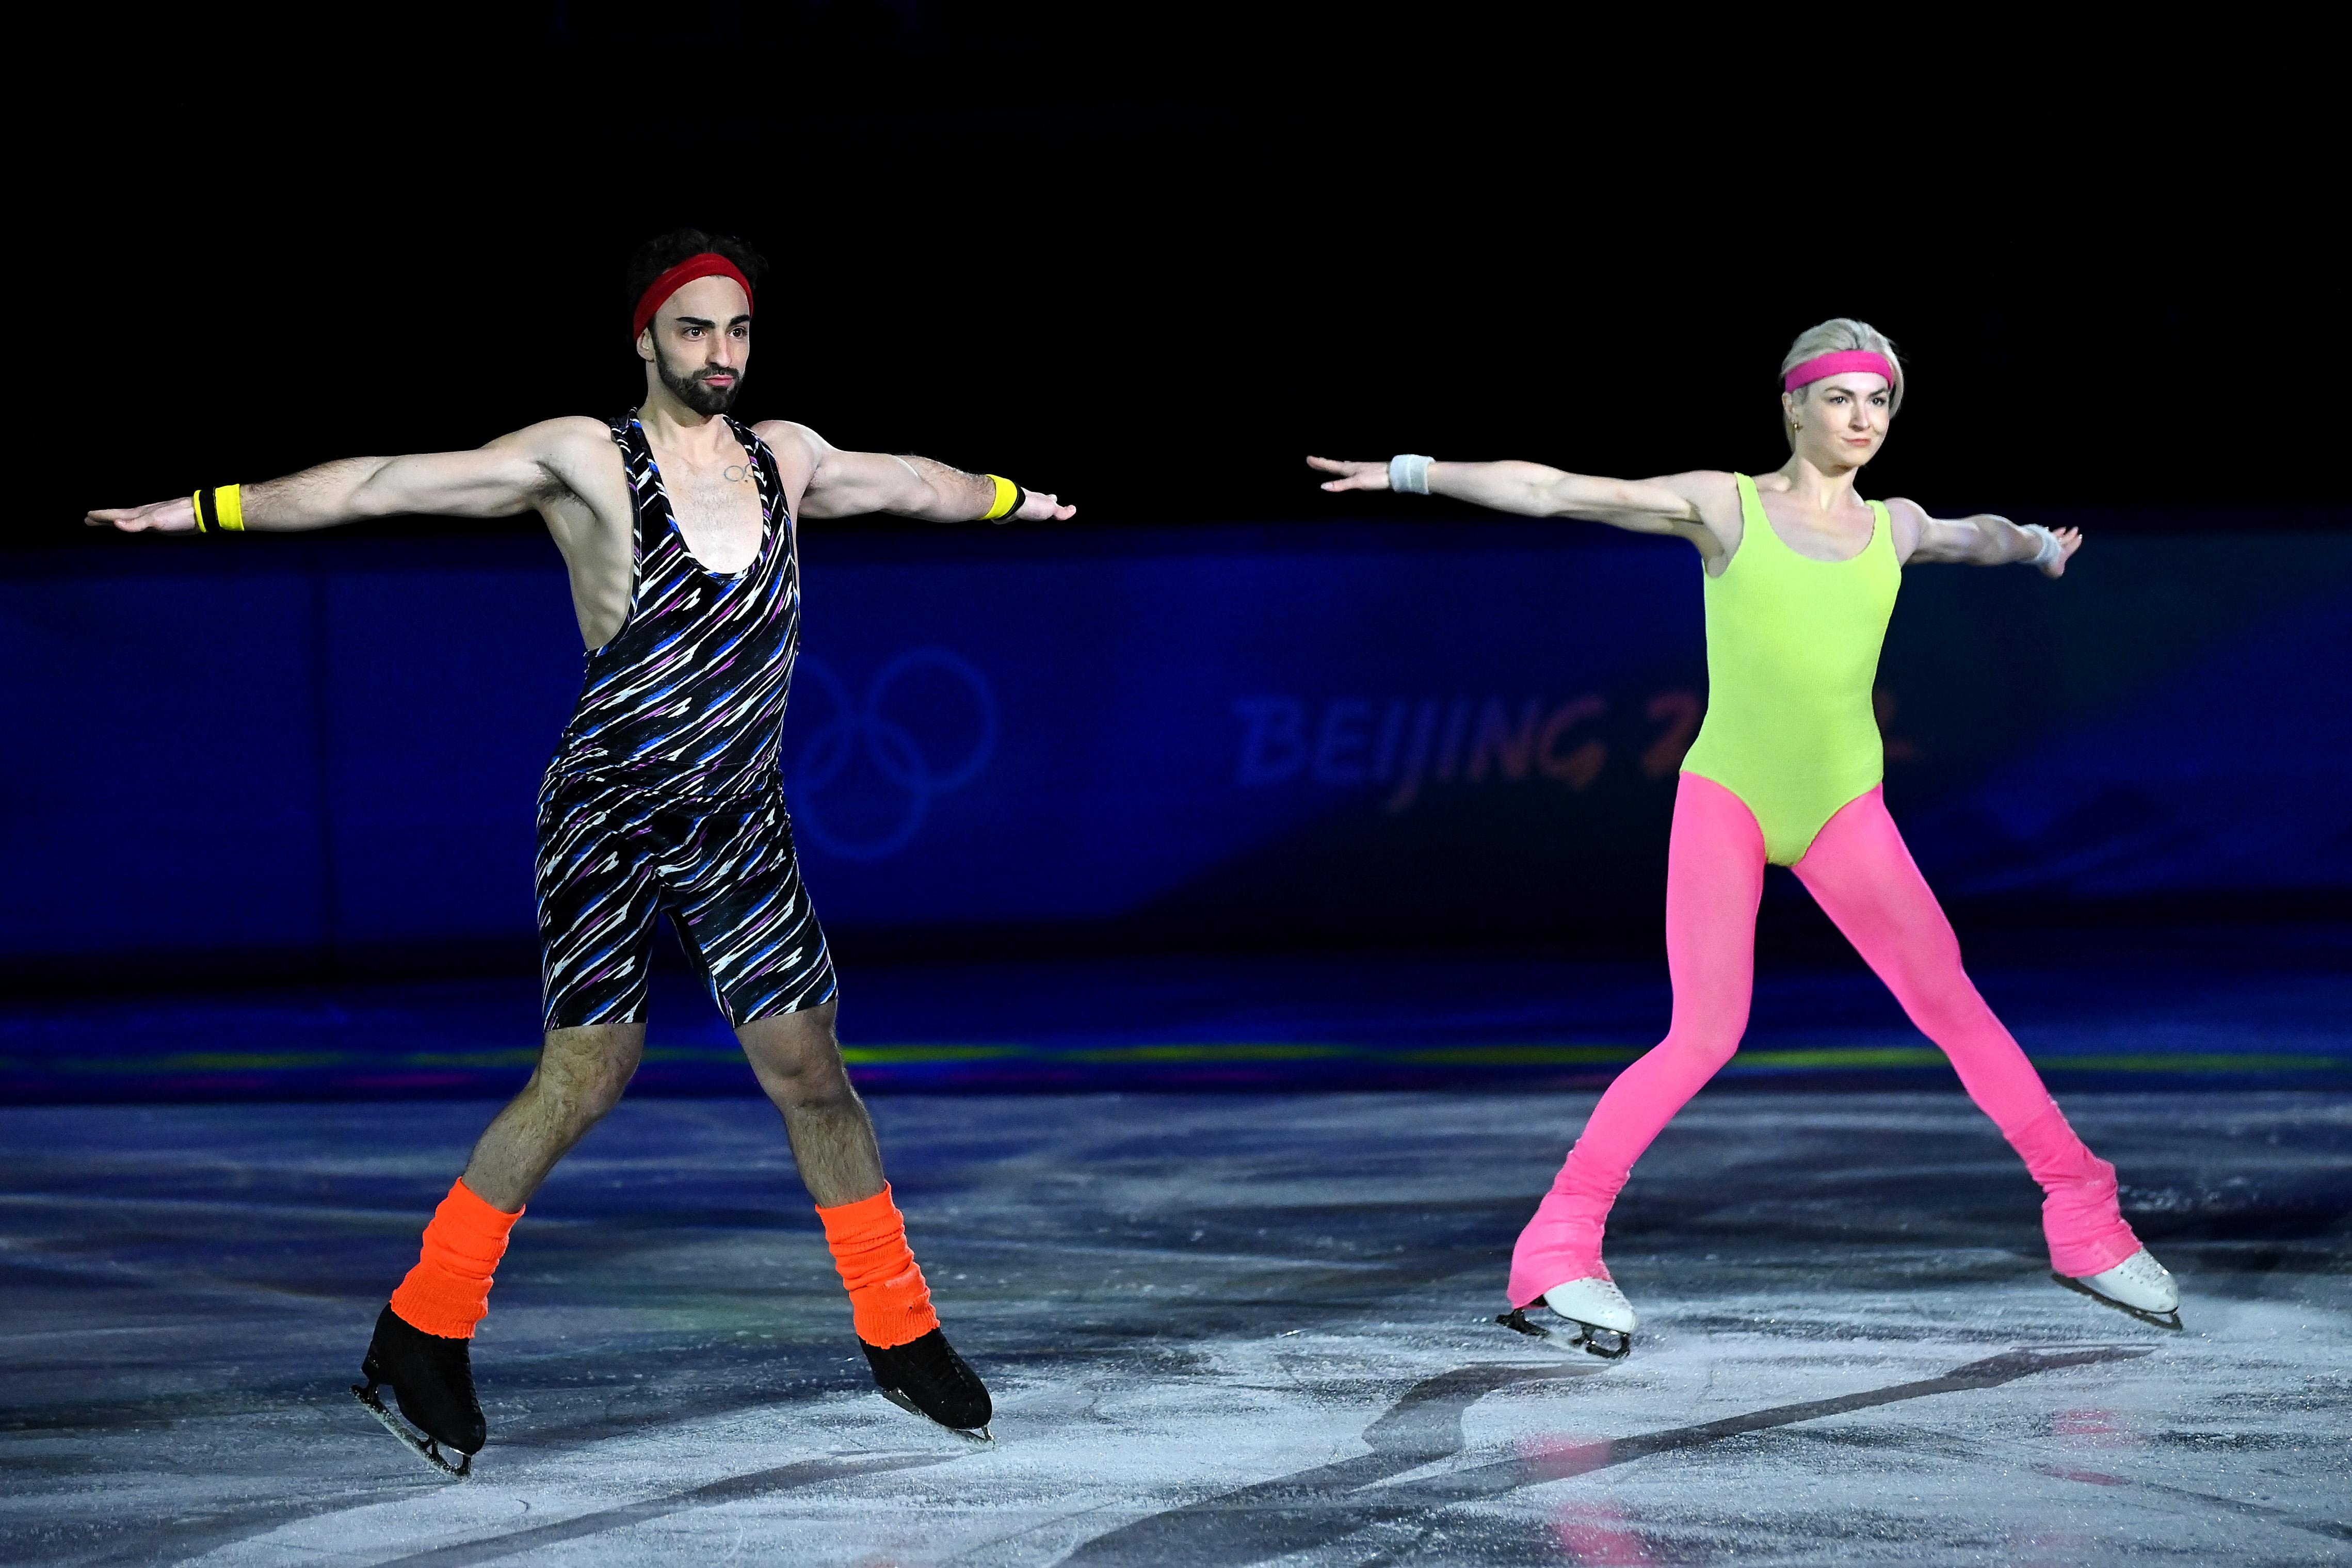 Olympics Figure Skating Gala Who wore it better? The Aladdin genie, the lumberjack, or Bing Dwen Dwen?